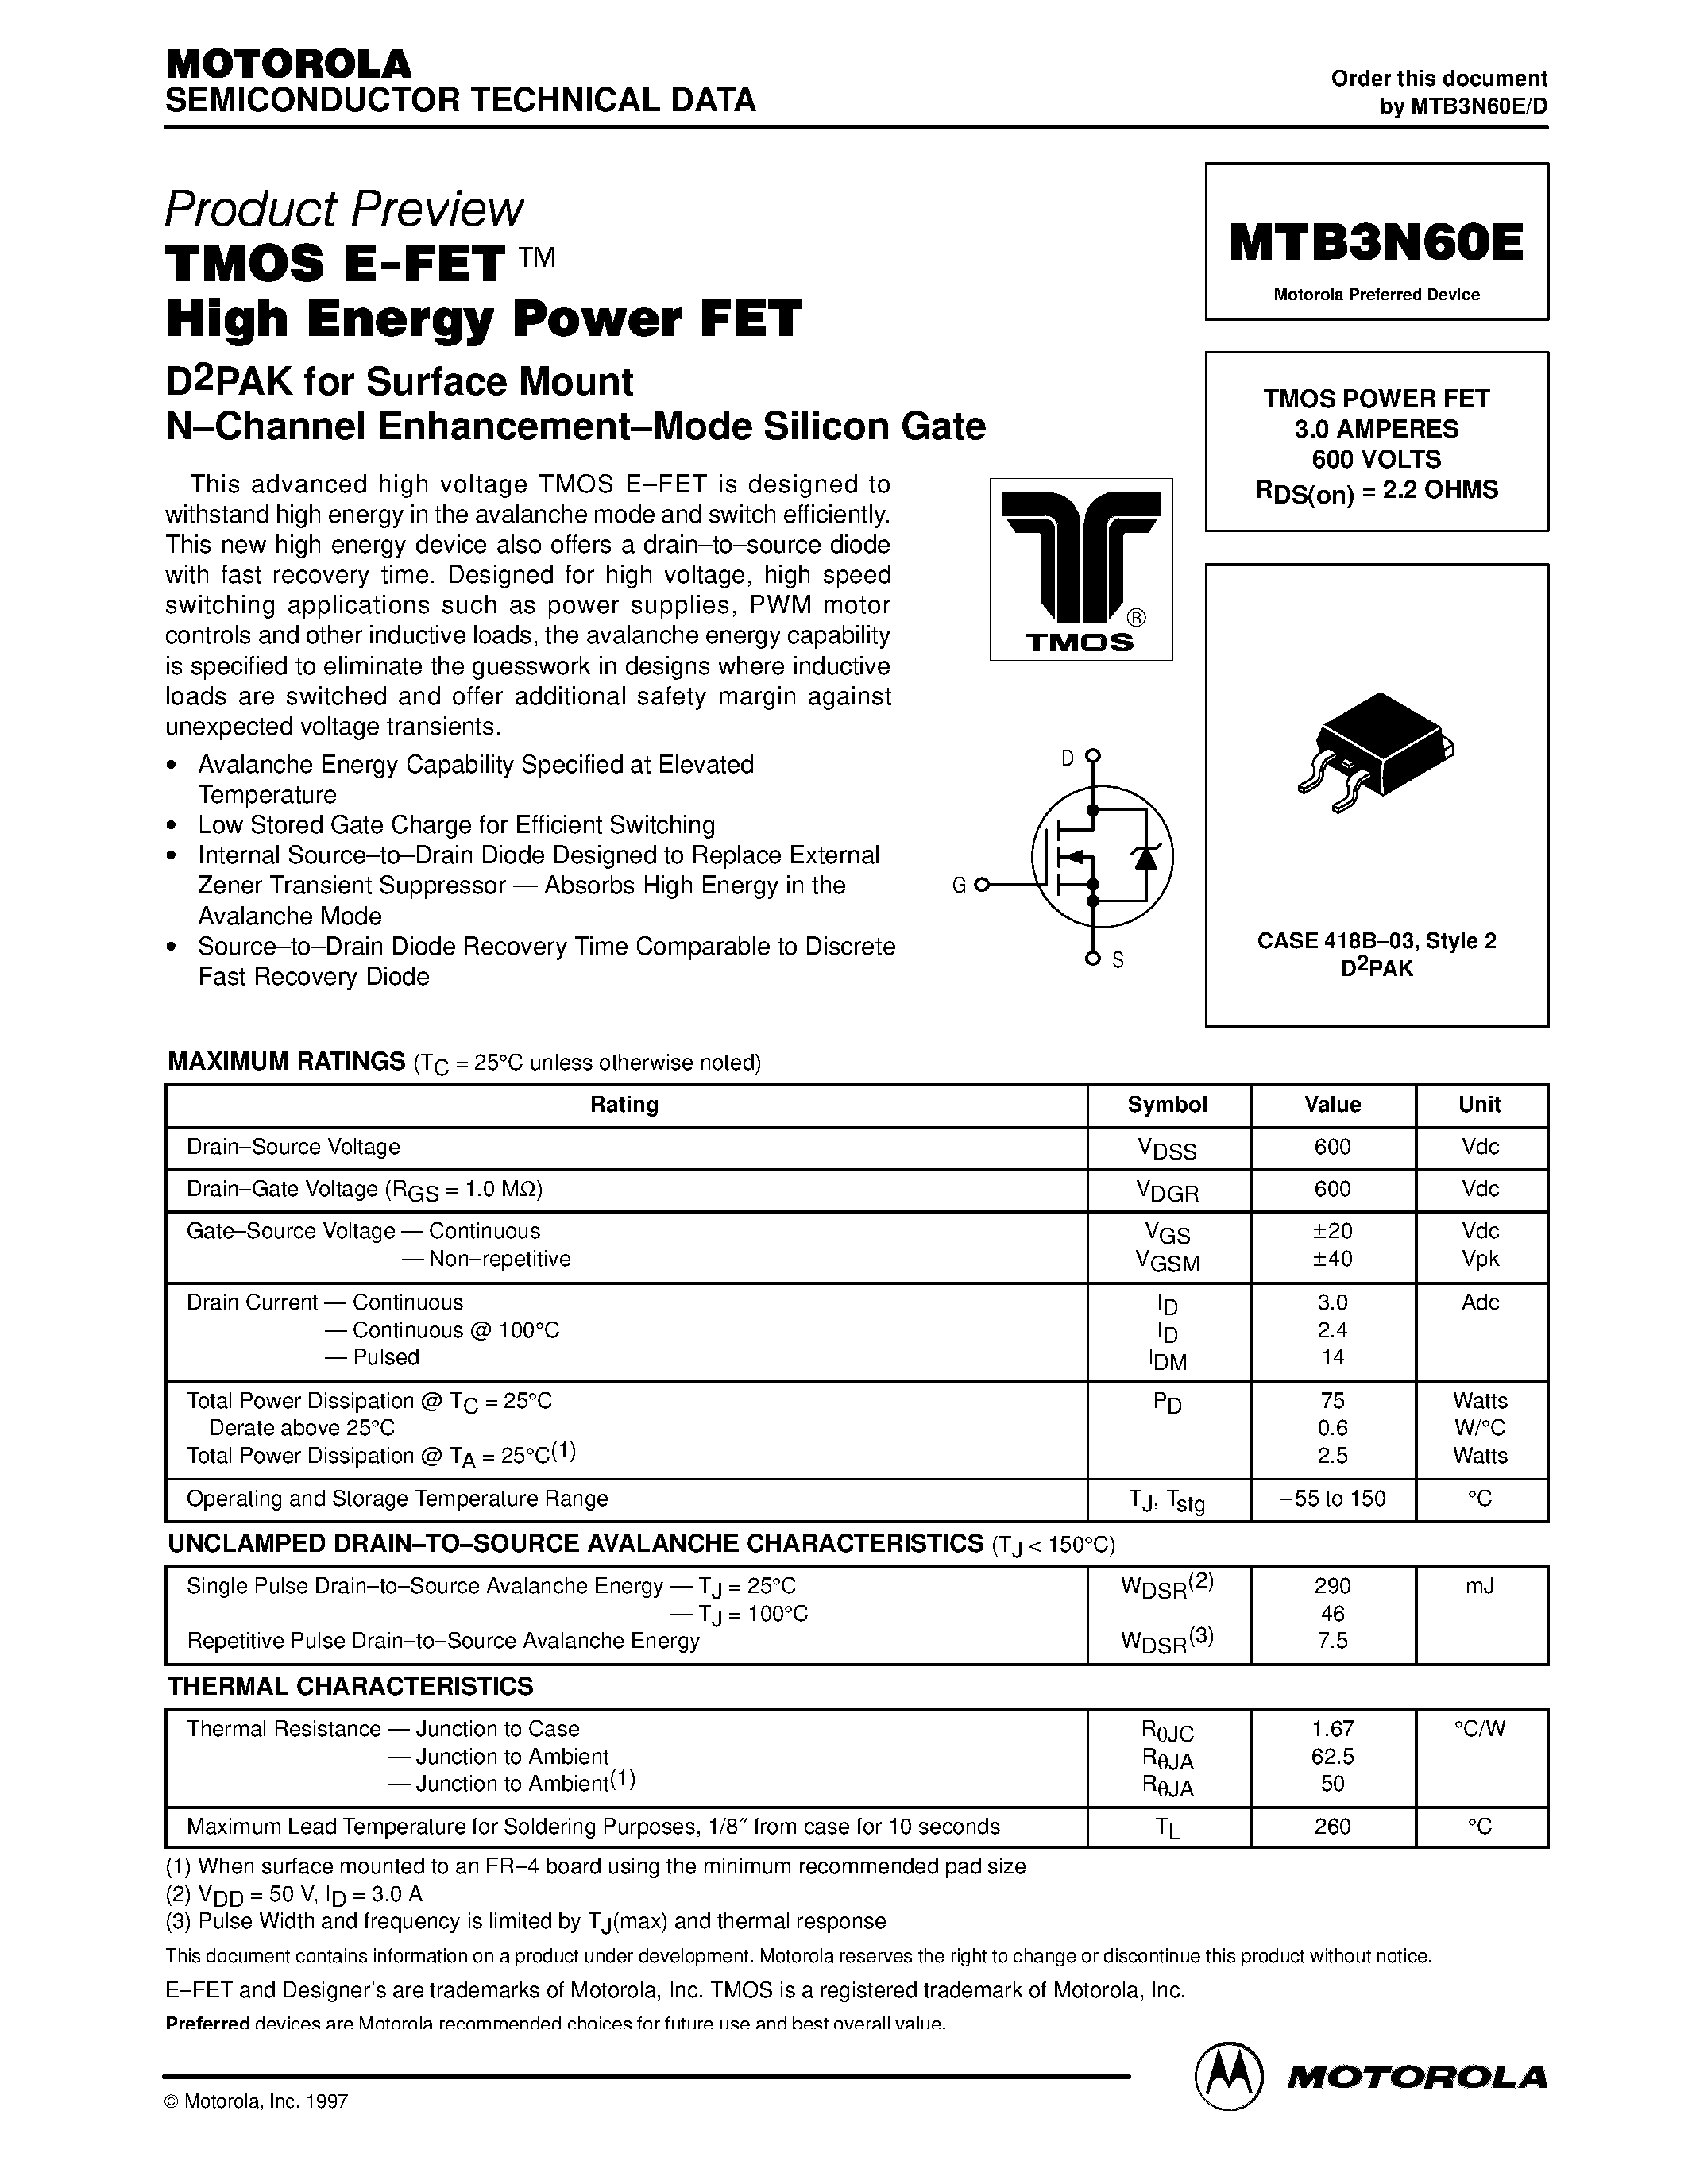 Даташит MTB3N60E - TMOS POWER FET 3.0 AMPERES 600 VOLTS страница 1